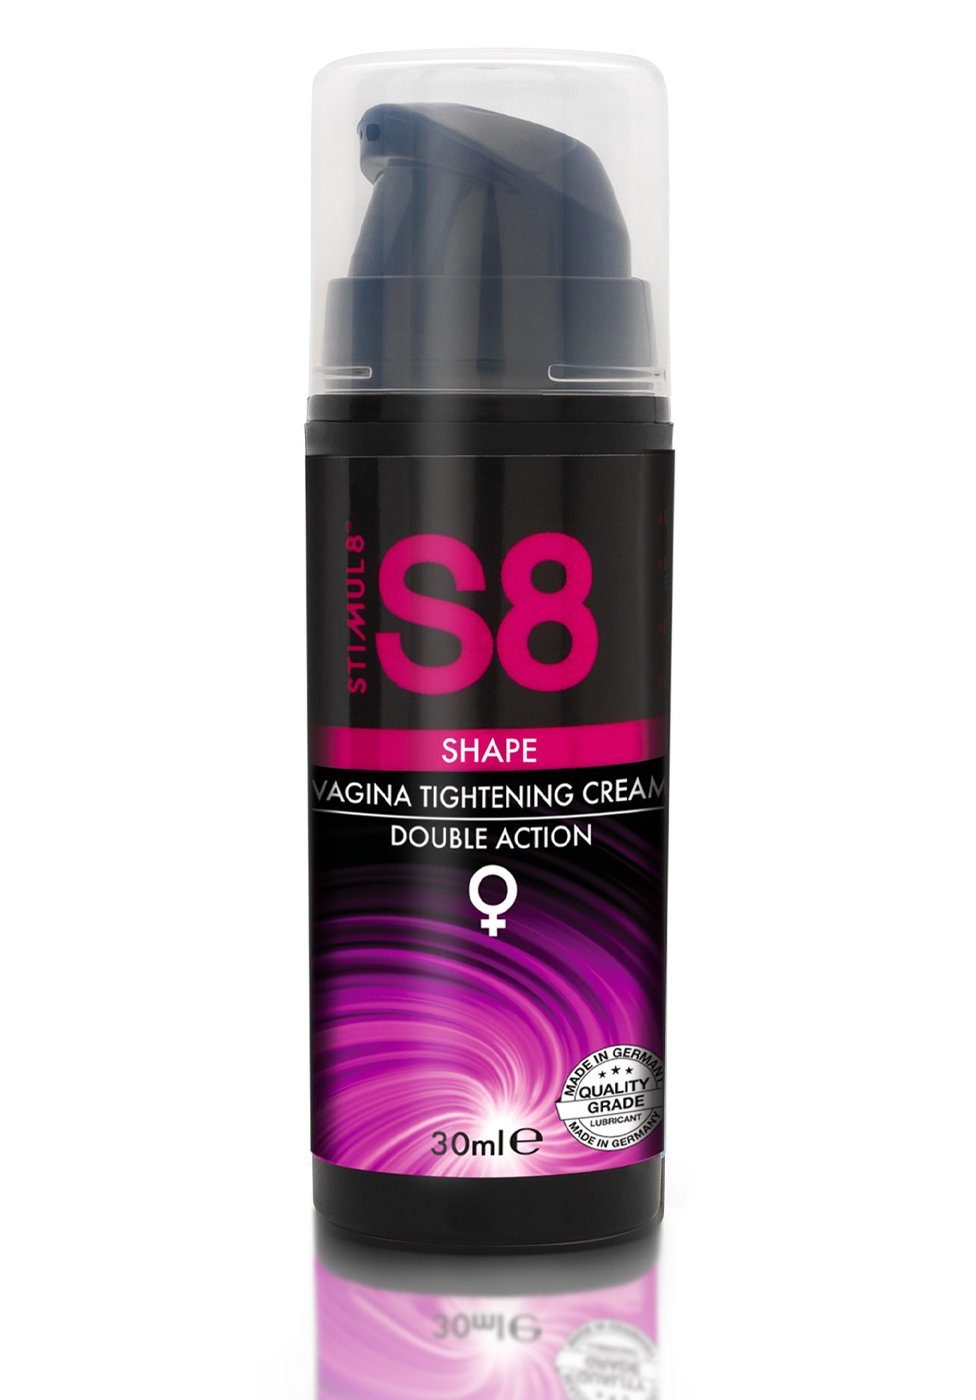 Stimul8 S8 Stimulationsgel Vagina Creme ml 30 Tightening Shape 